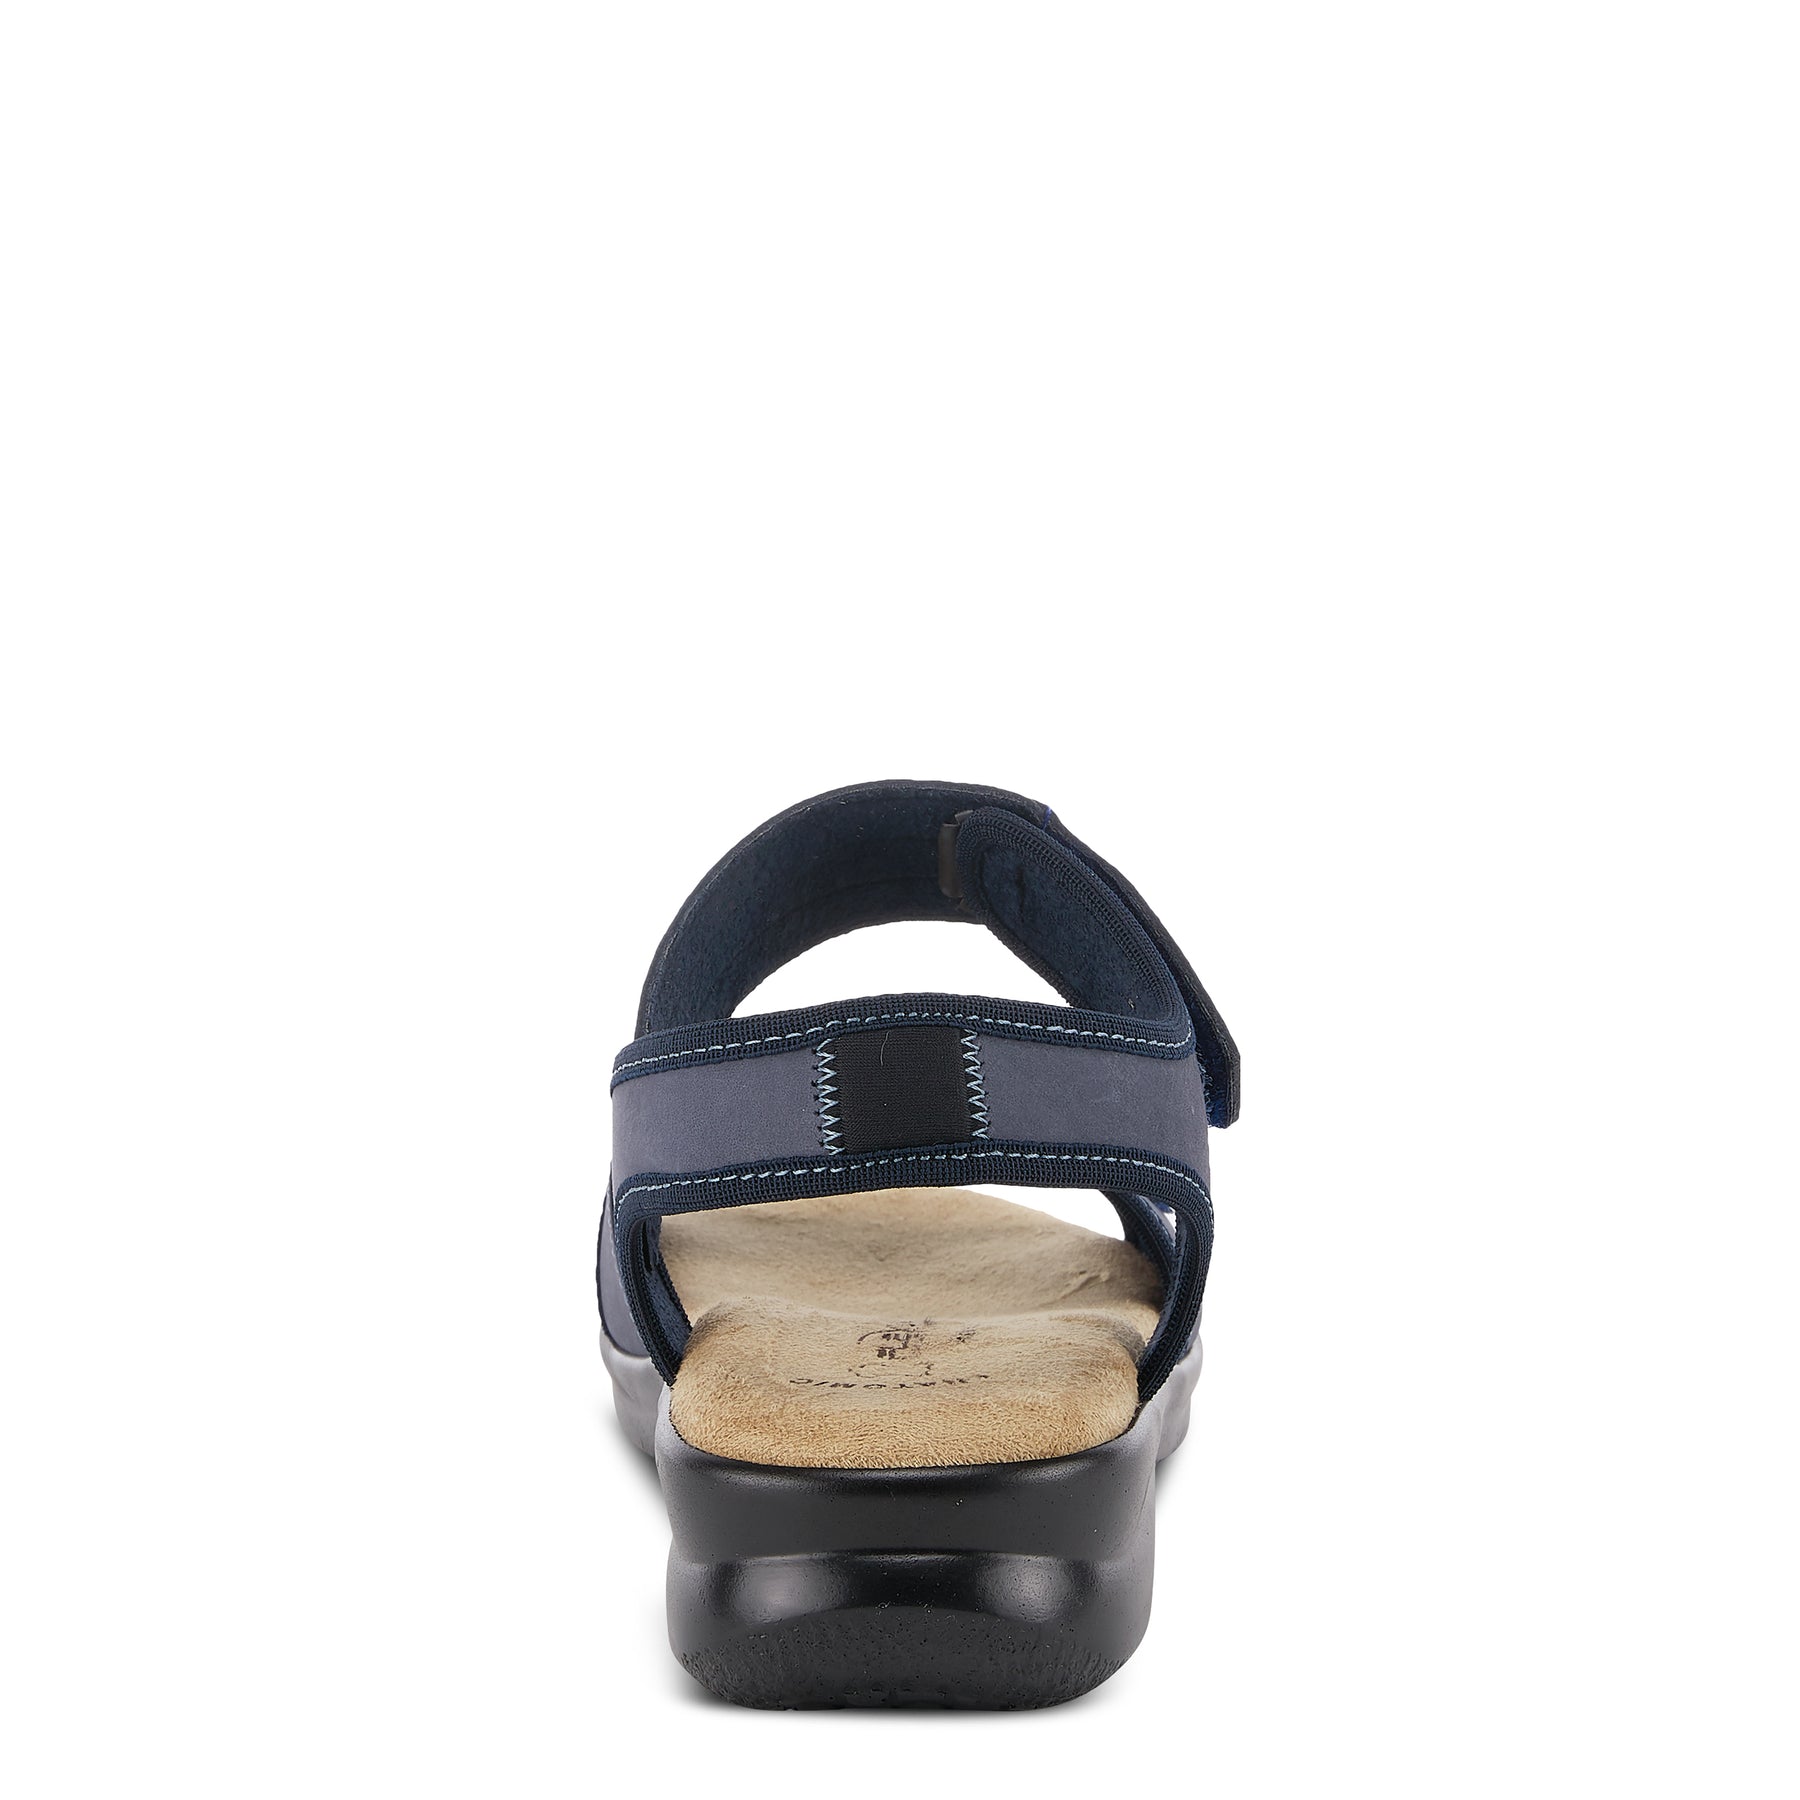 BLACK DANILA SANDAL by FLEXUS – Spring Step Shoes